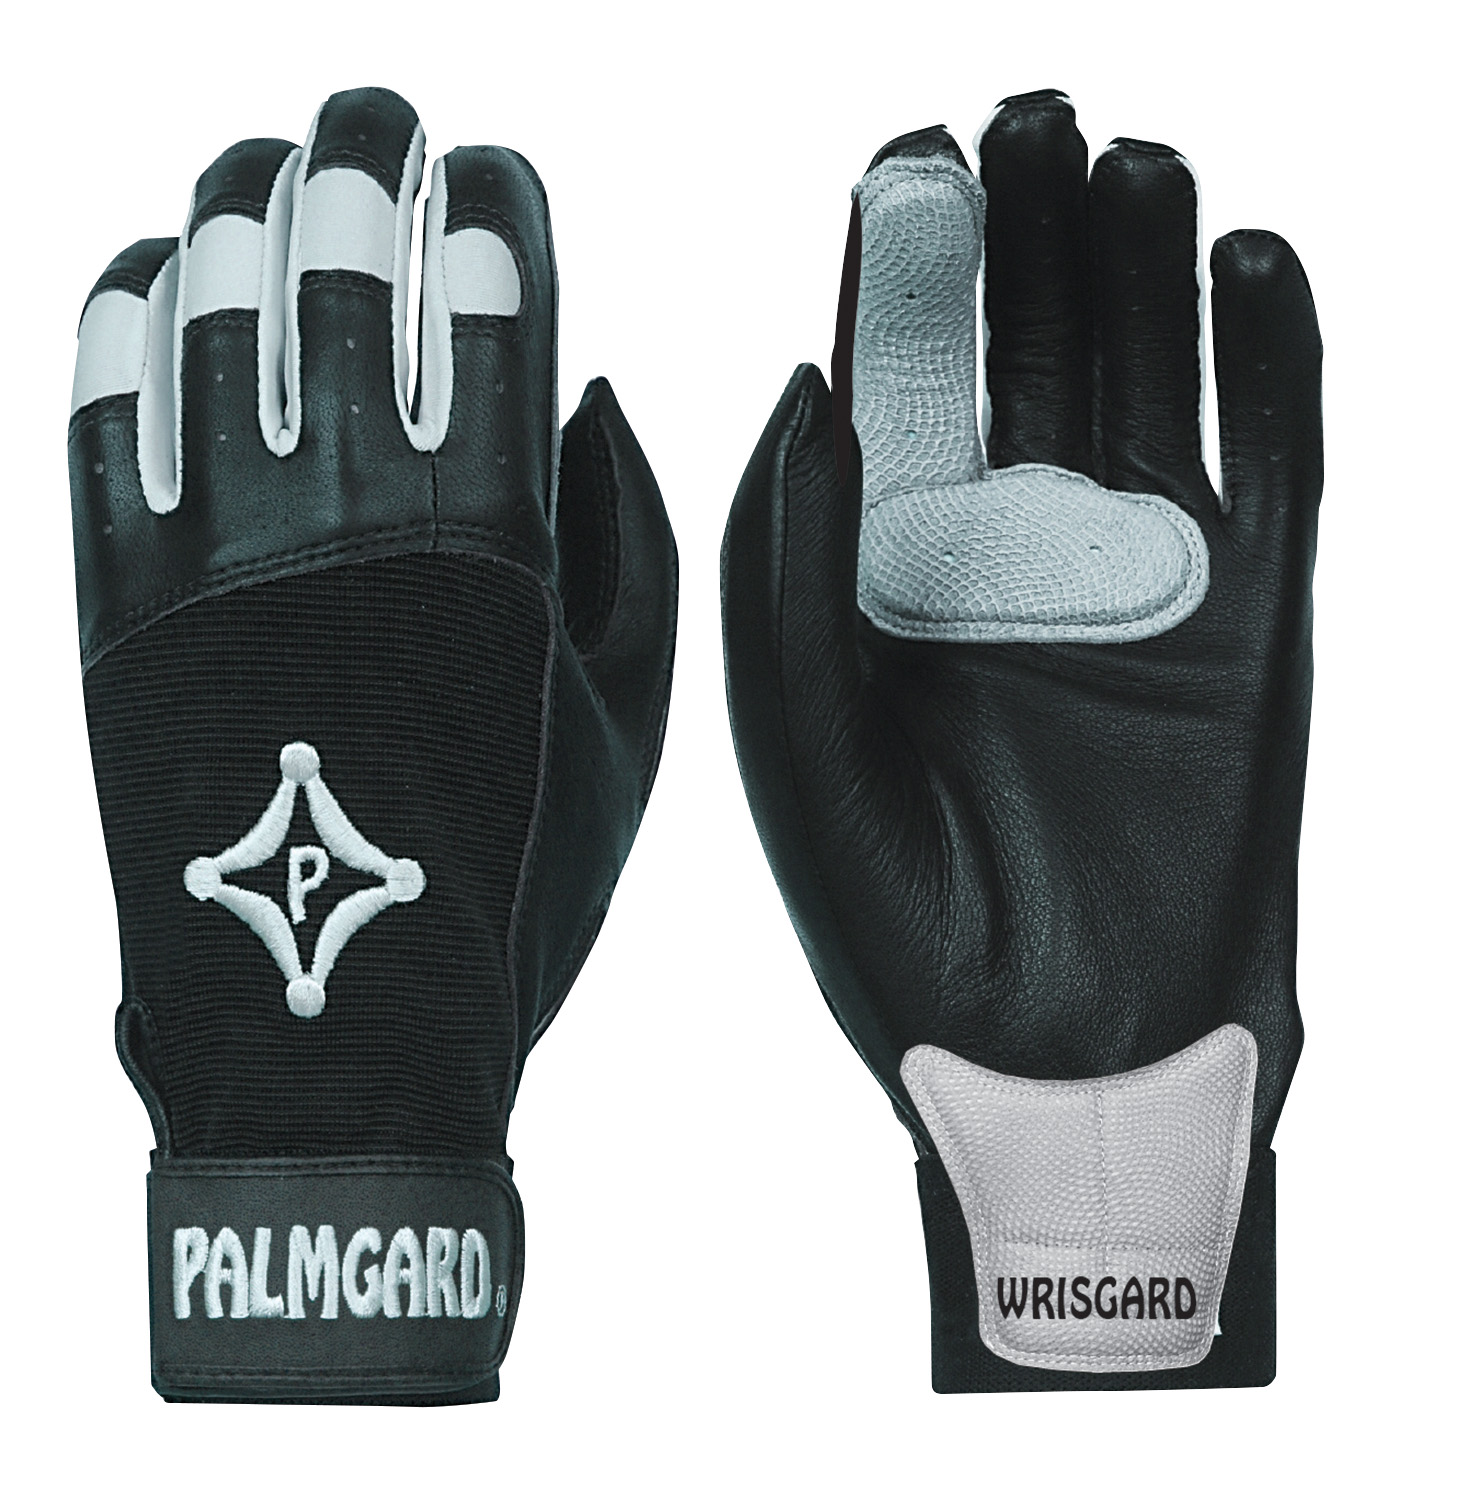 Palmgard STS Adult Batting Glove - Small, Black/Grey